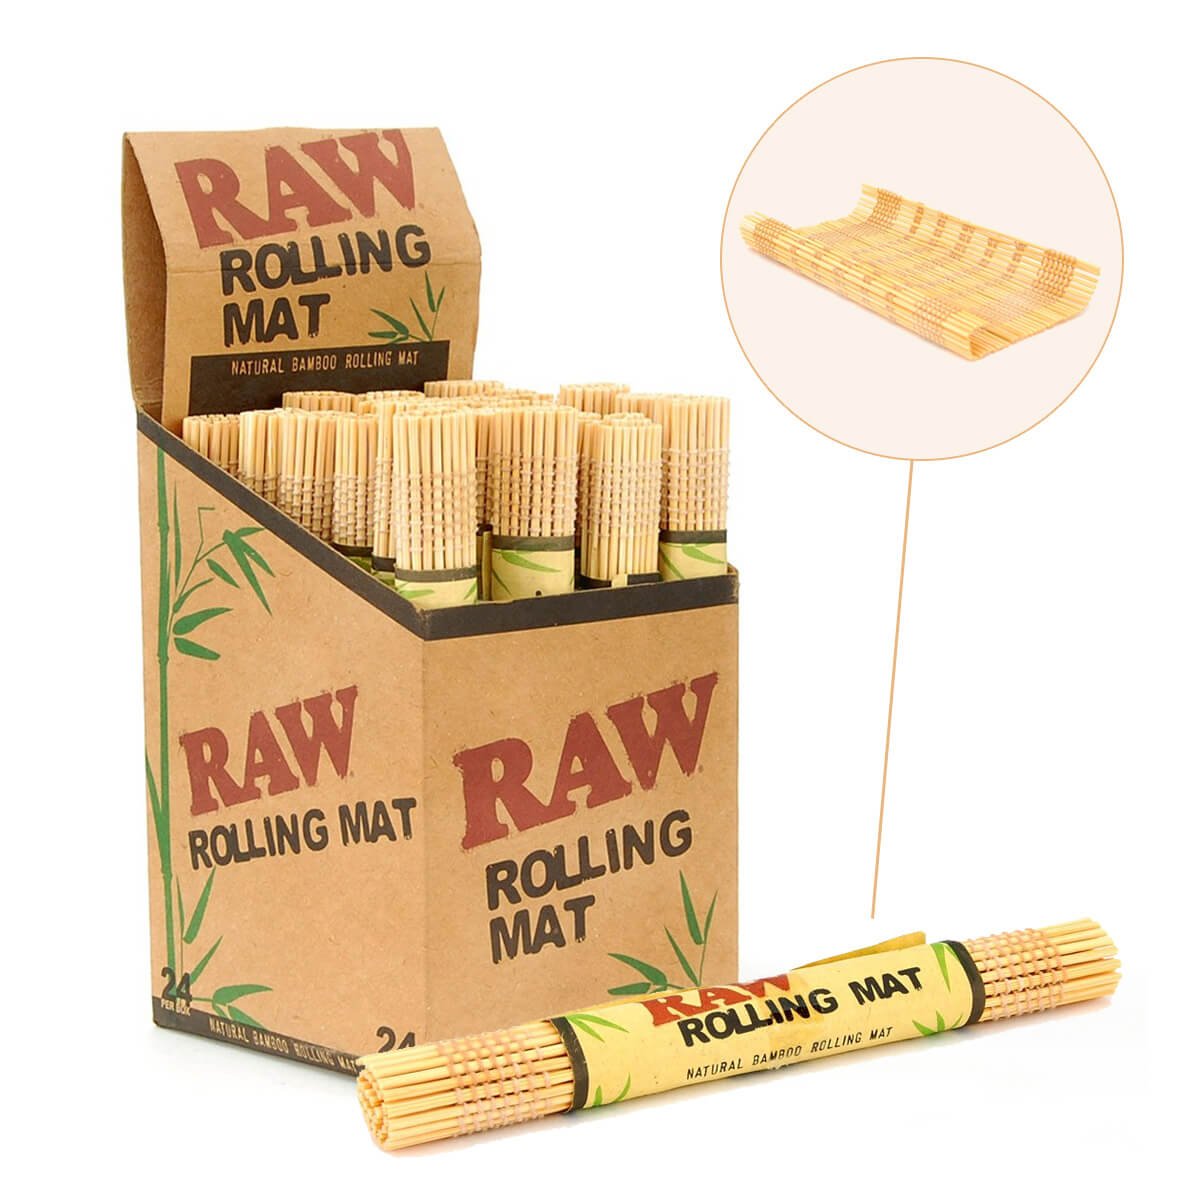 Bamboo rolls. Бумага smoking Raw King Size Slim Classic. Коврик для скручивания самокруток Raw бамбуковый арт.409333. Raw Kağit. Rolling mat.